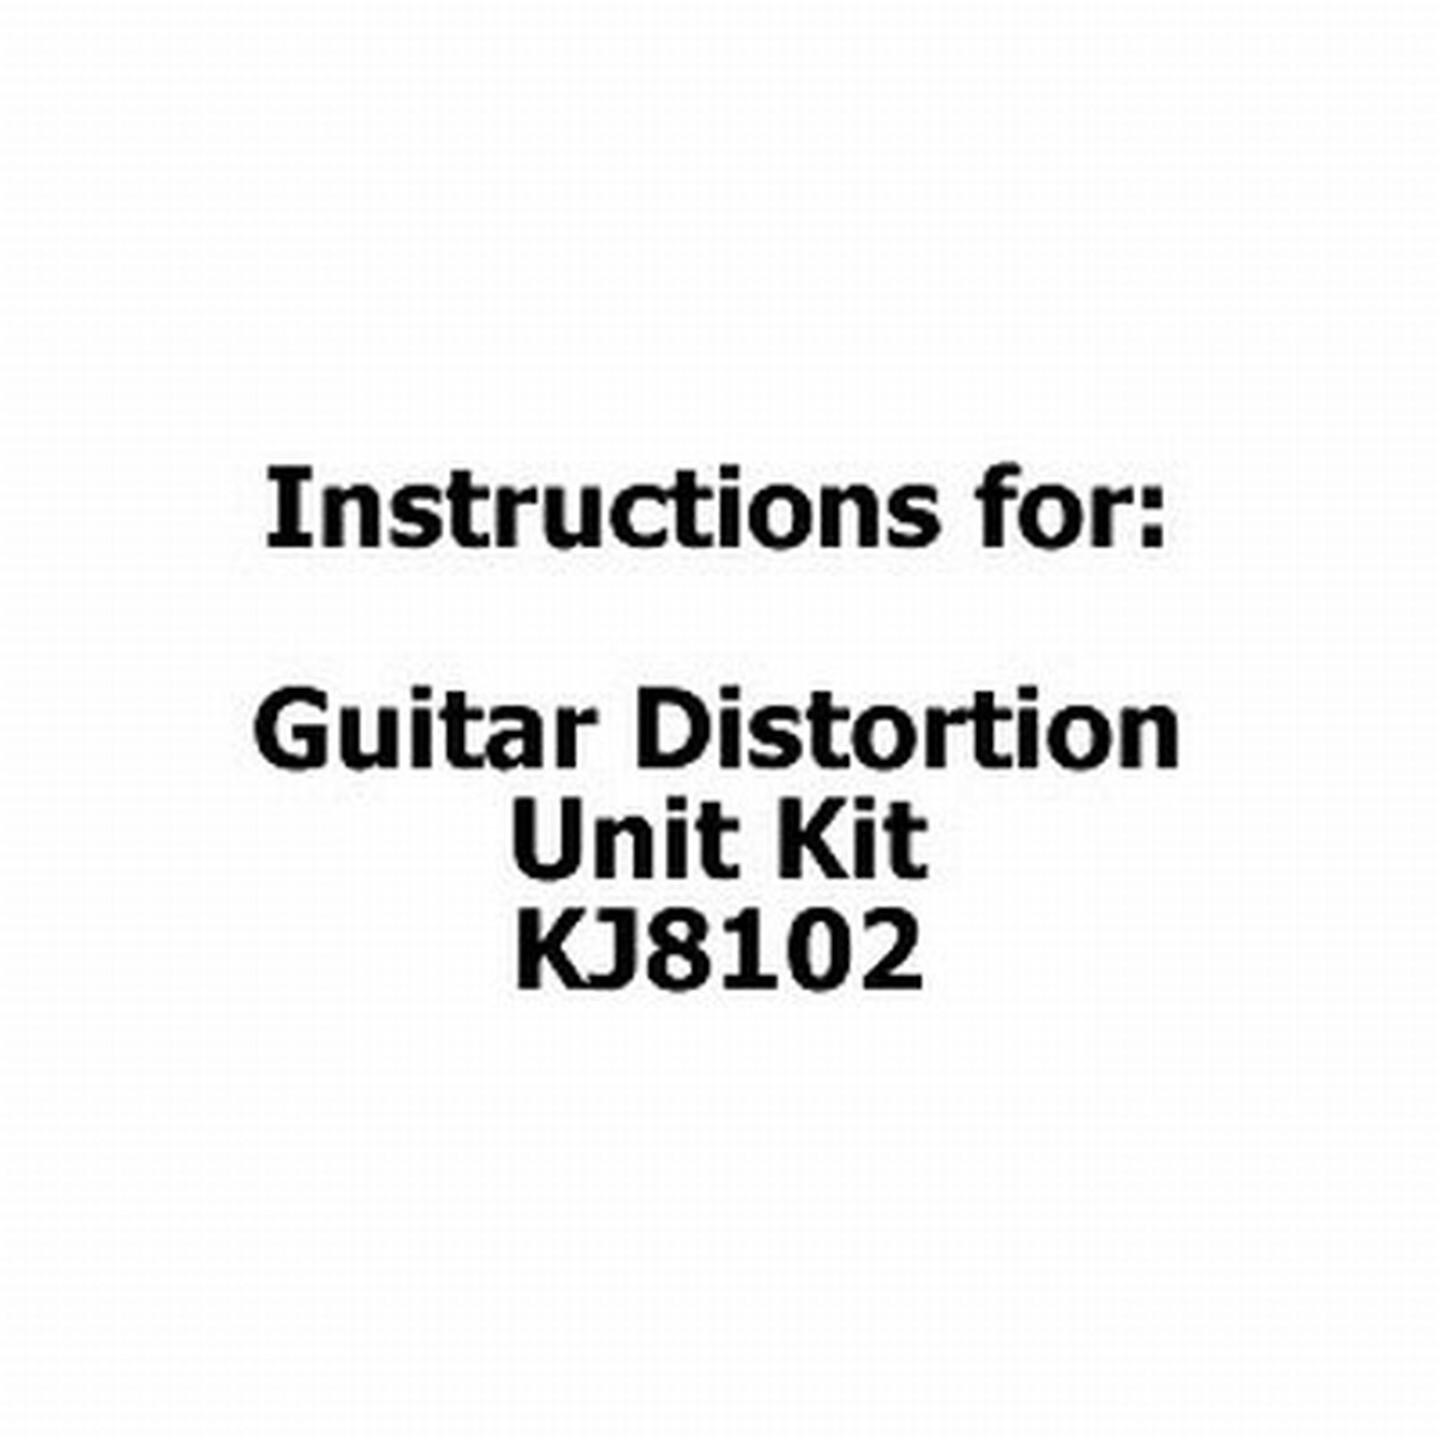 Instructions for Guitar Distortion Unit Kit - KJ8102